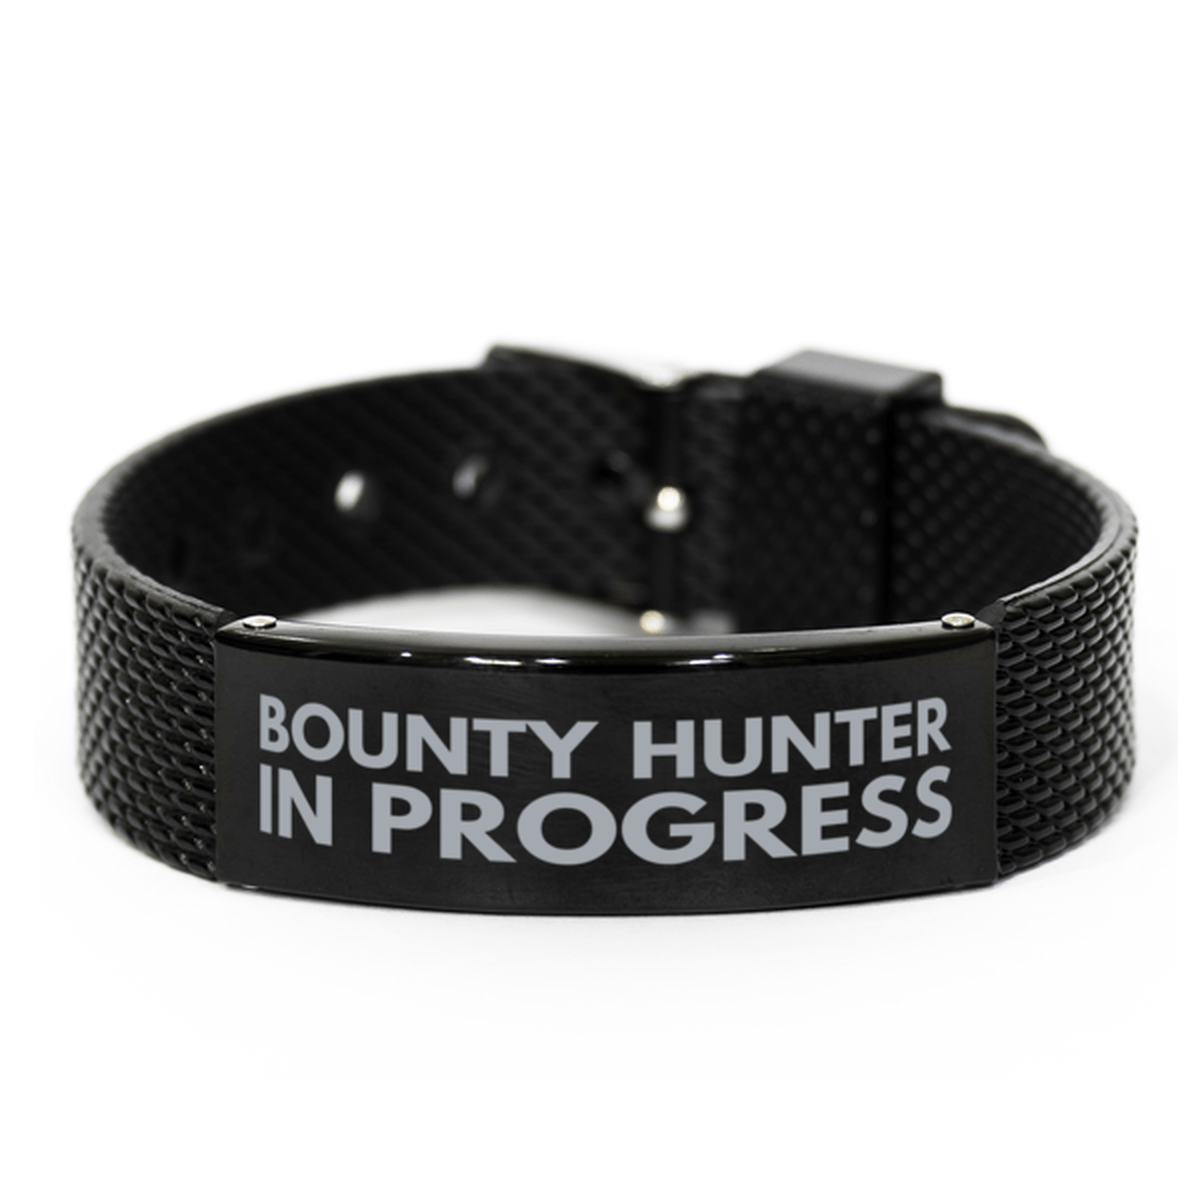 Inspirational Bounty Hunter Black Shark Mesh Bracelet, Bounty Hunter In Progress, Best Graduation Gifts for Students